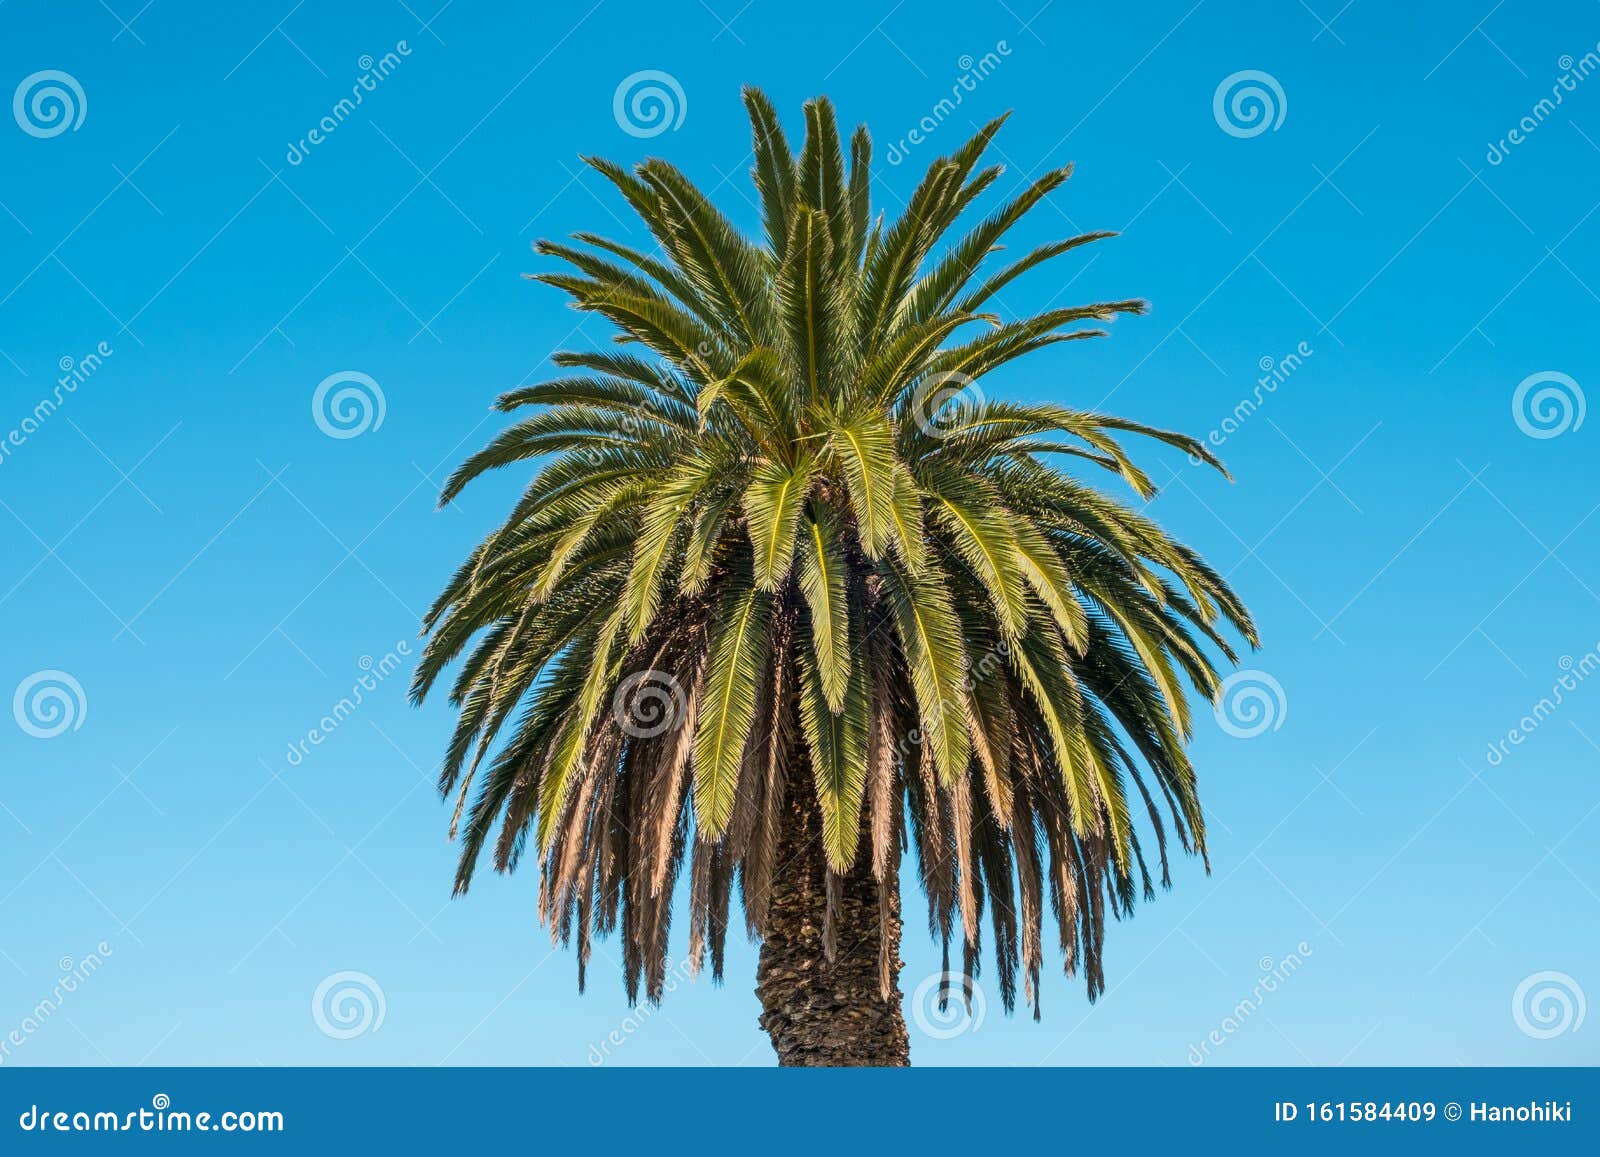 palm tree  on blue sky background - palmera canariensis